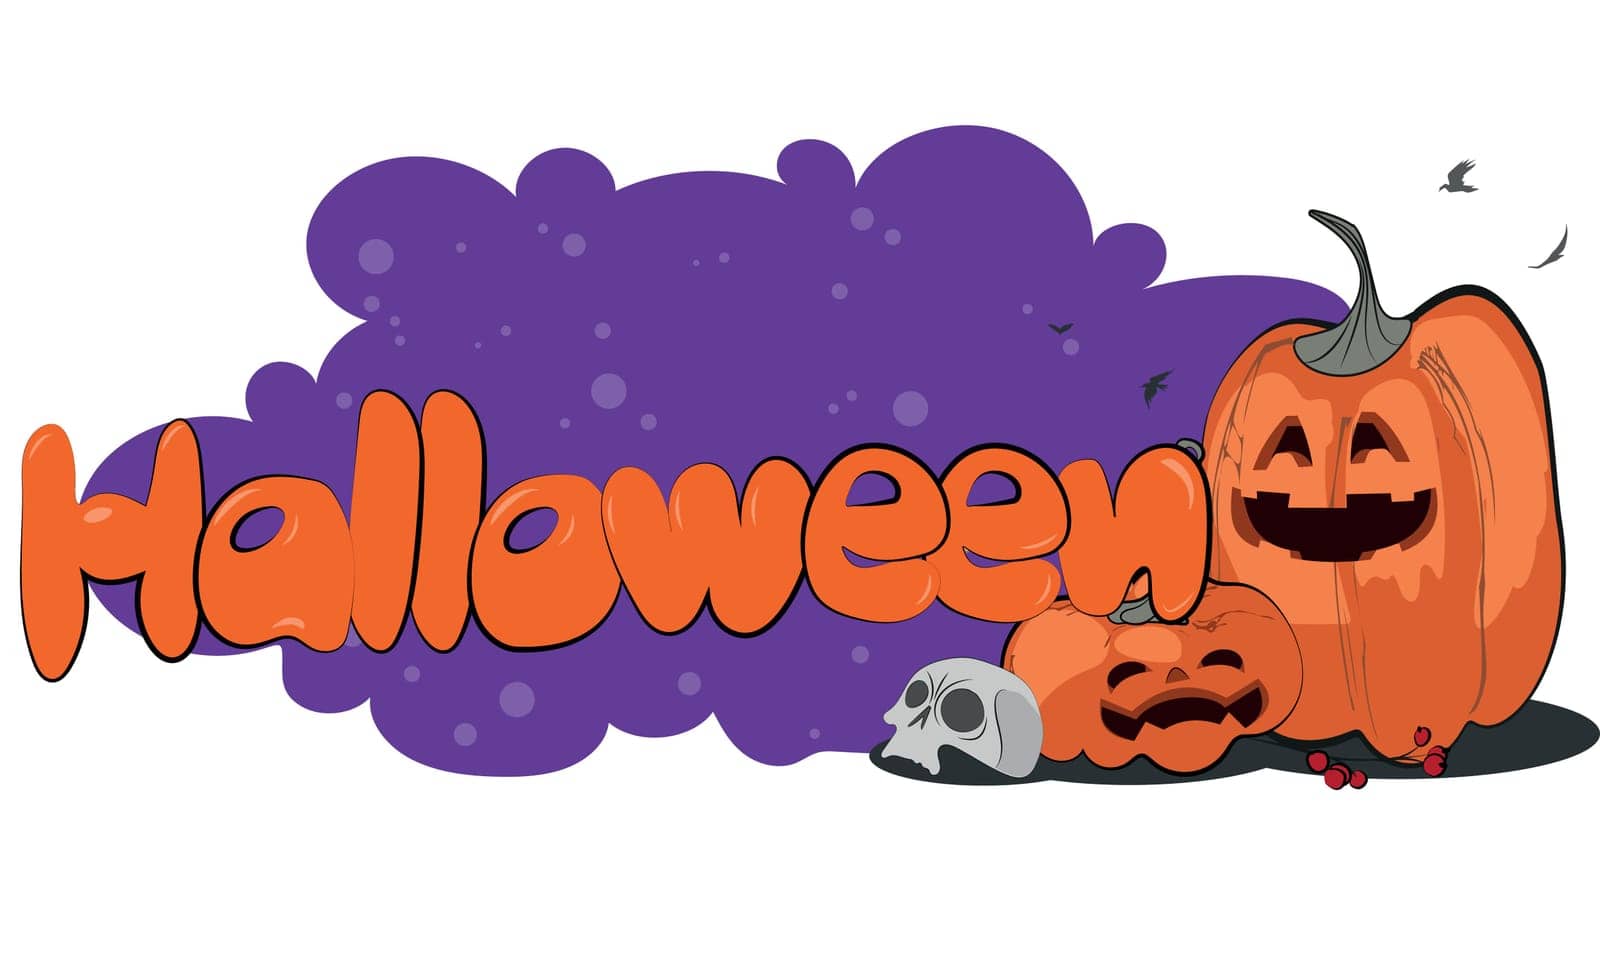 Happy Halloween banner or party invitation by milastokerpro